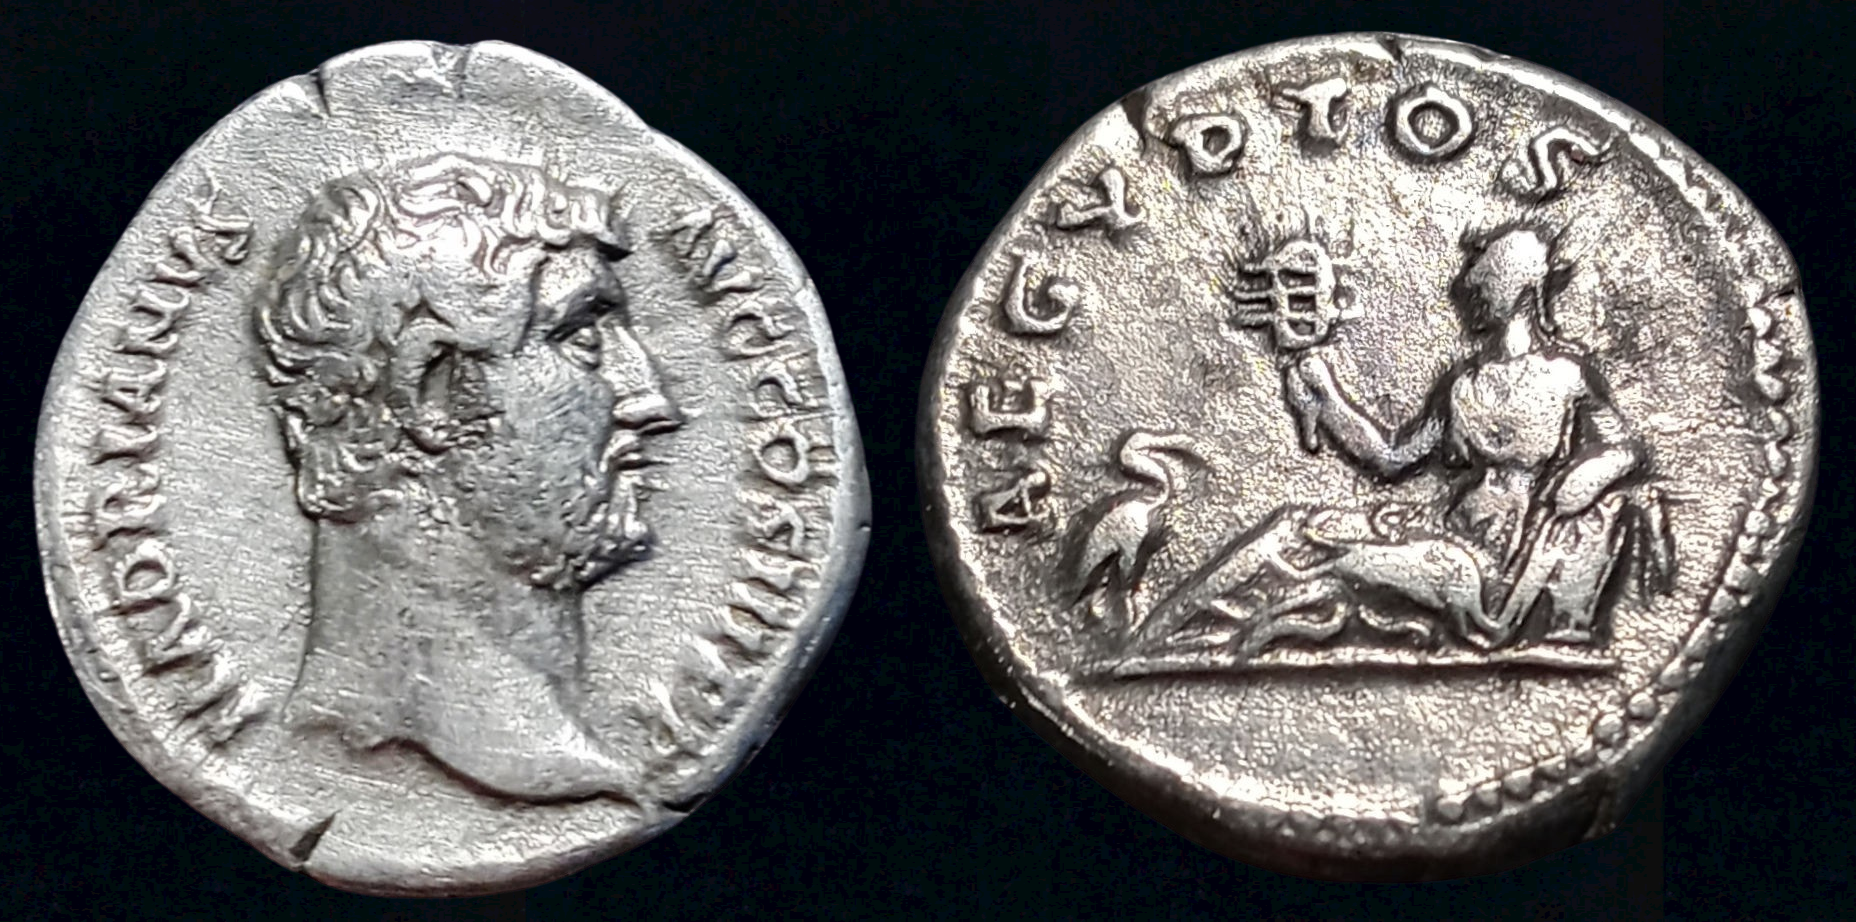 Hadrian-Aegyptos - new combined photo.png